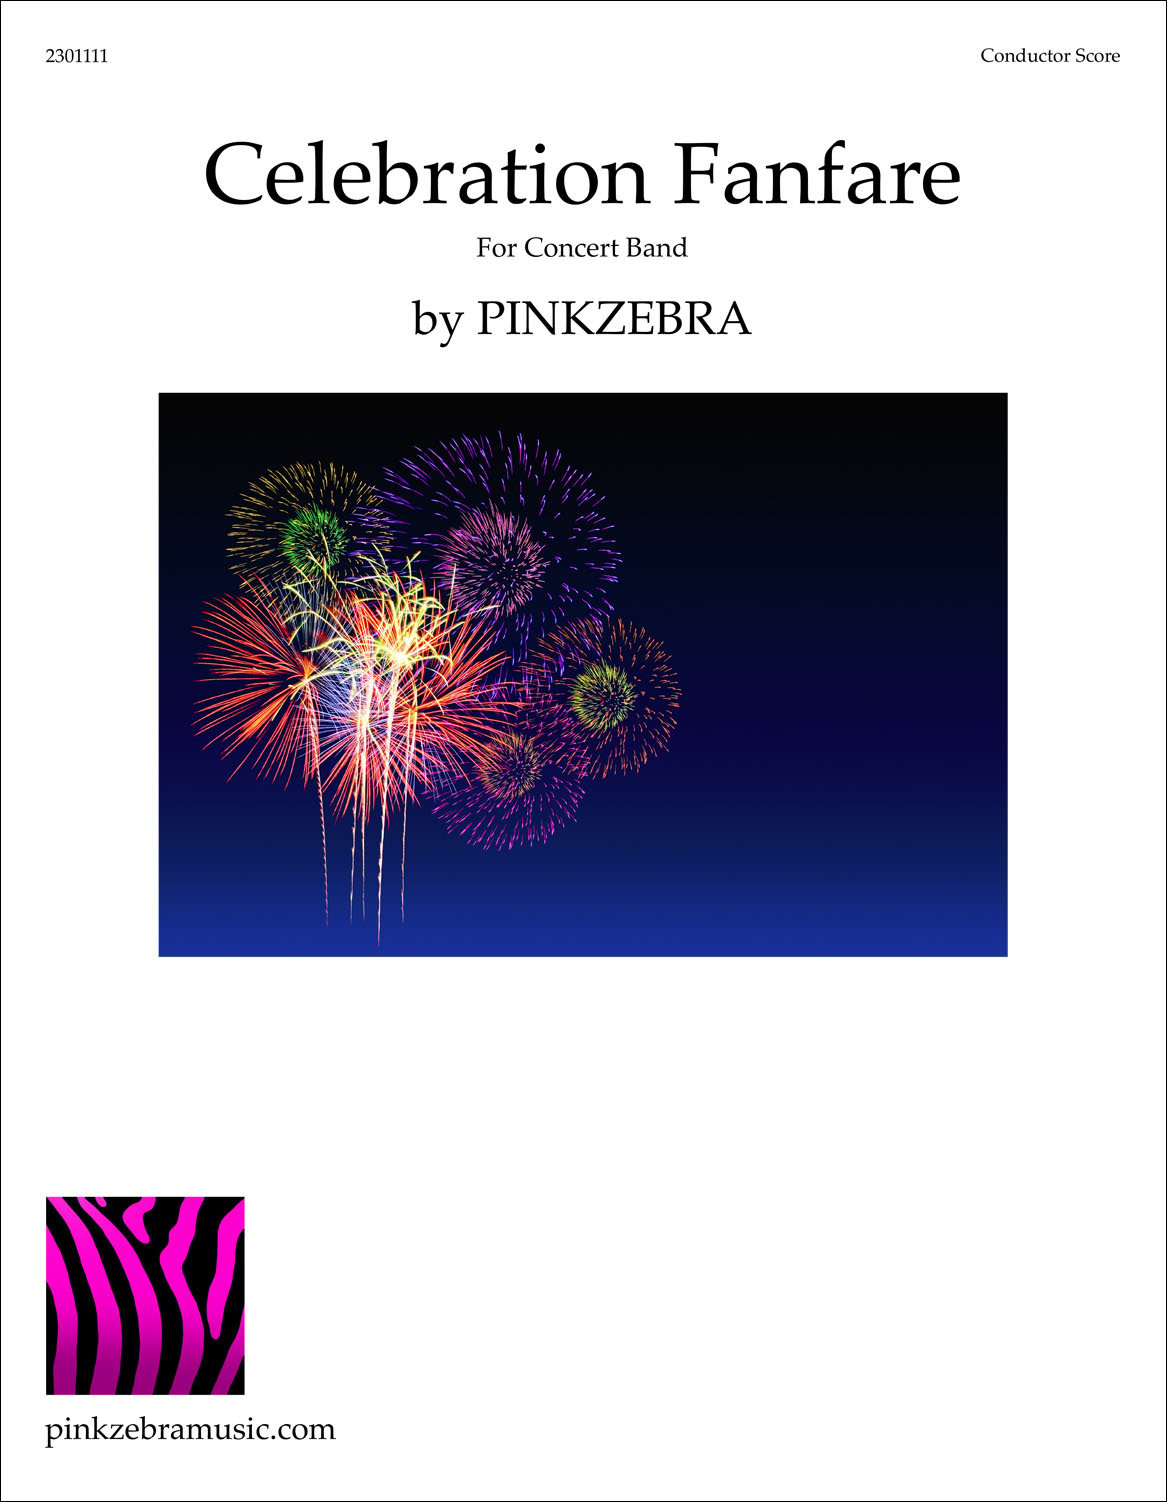 Celebration Fanfare by Pinkzebra